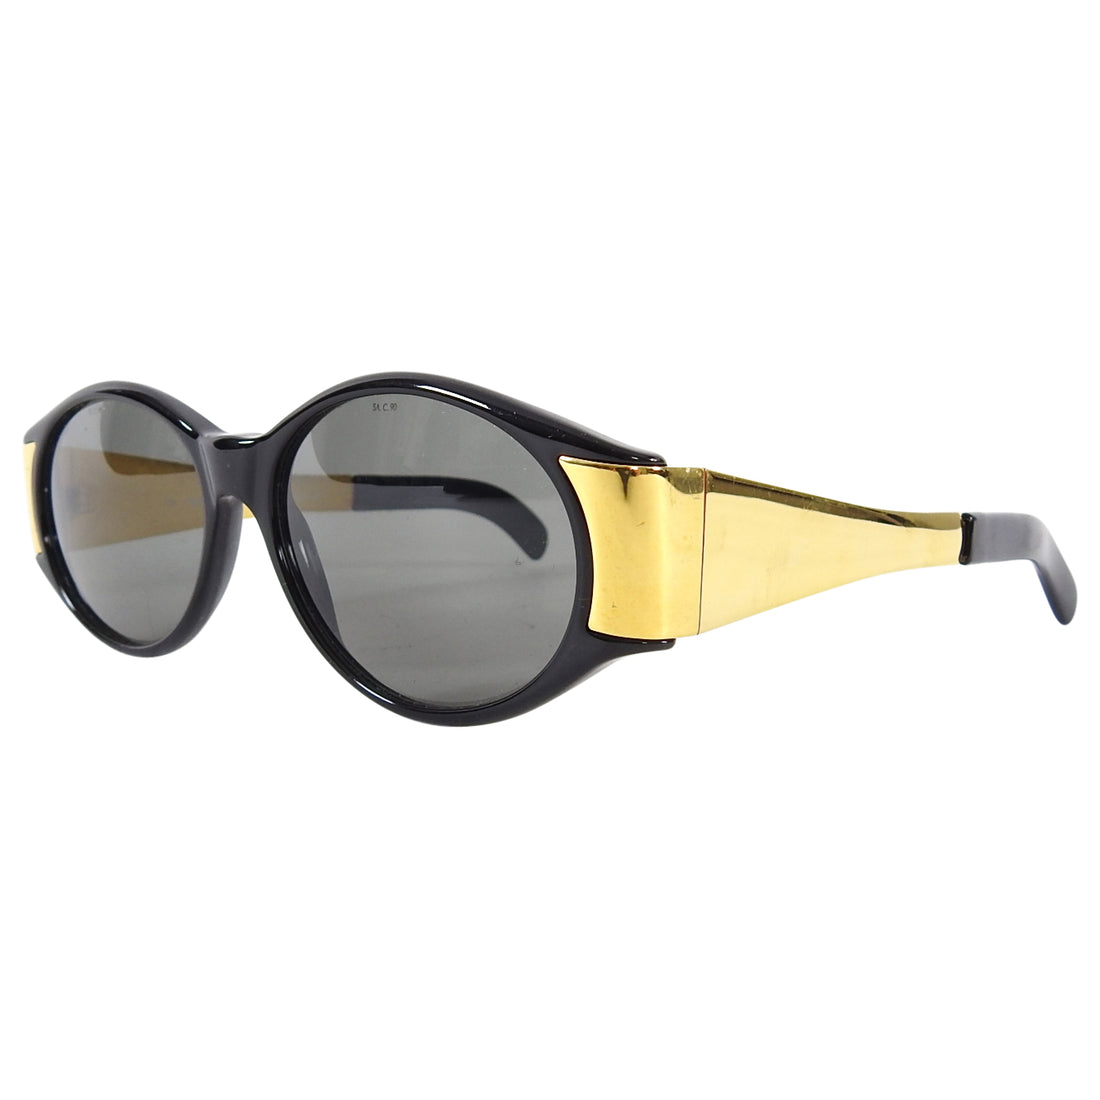 Gianfranco Ferre Vintage 1990's Black and Gold Sunglasses GFF141